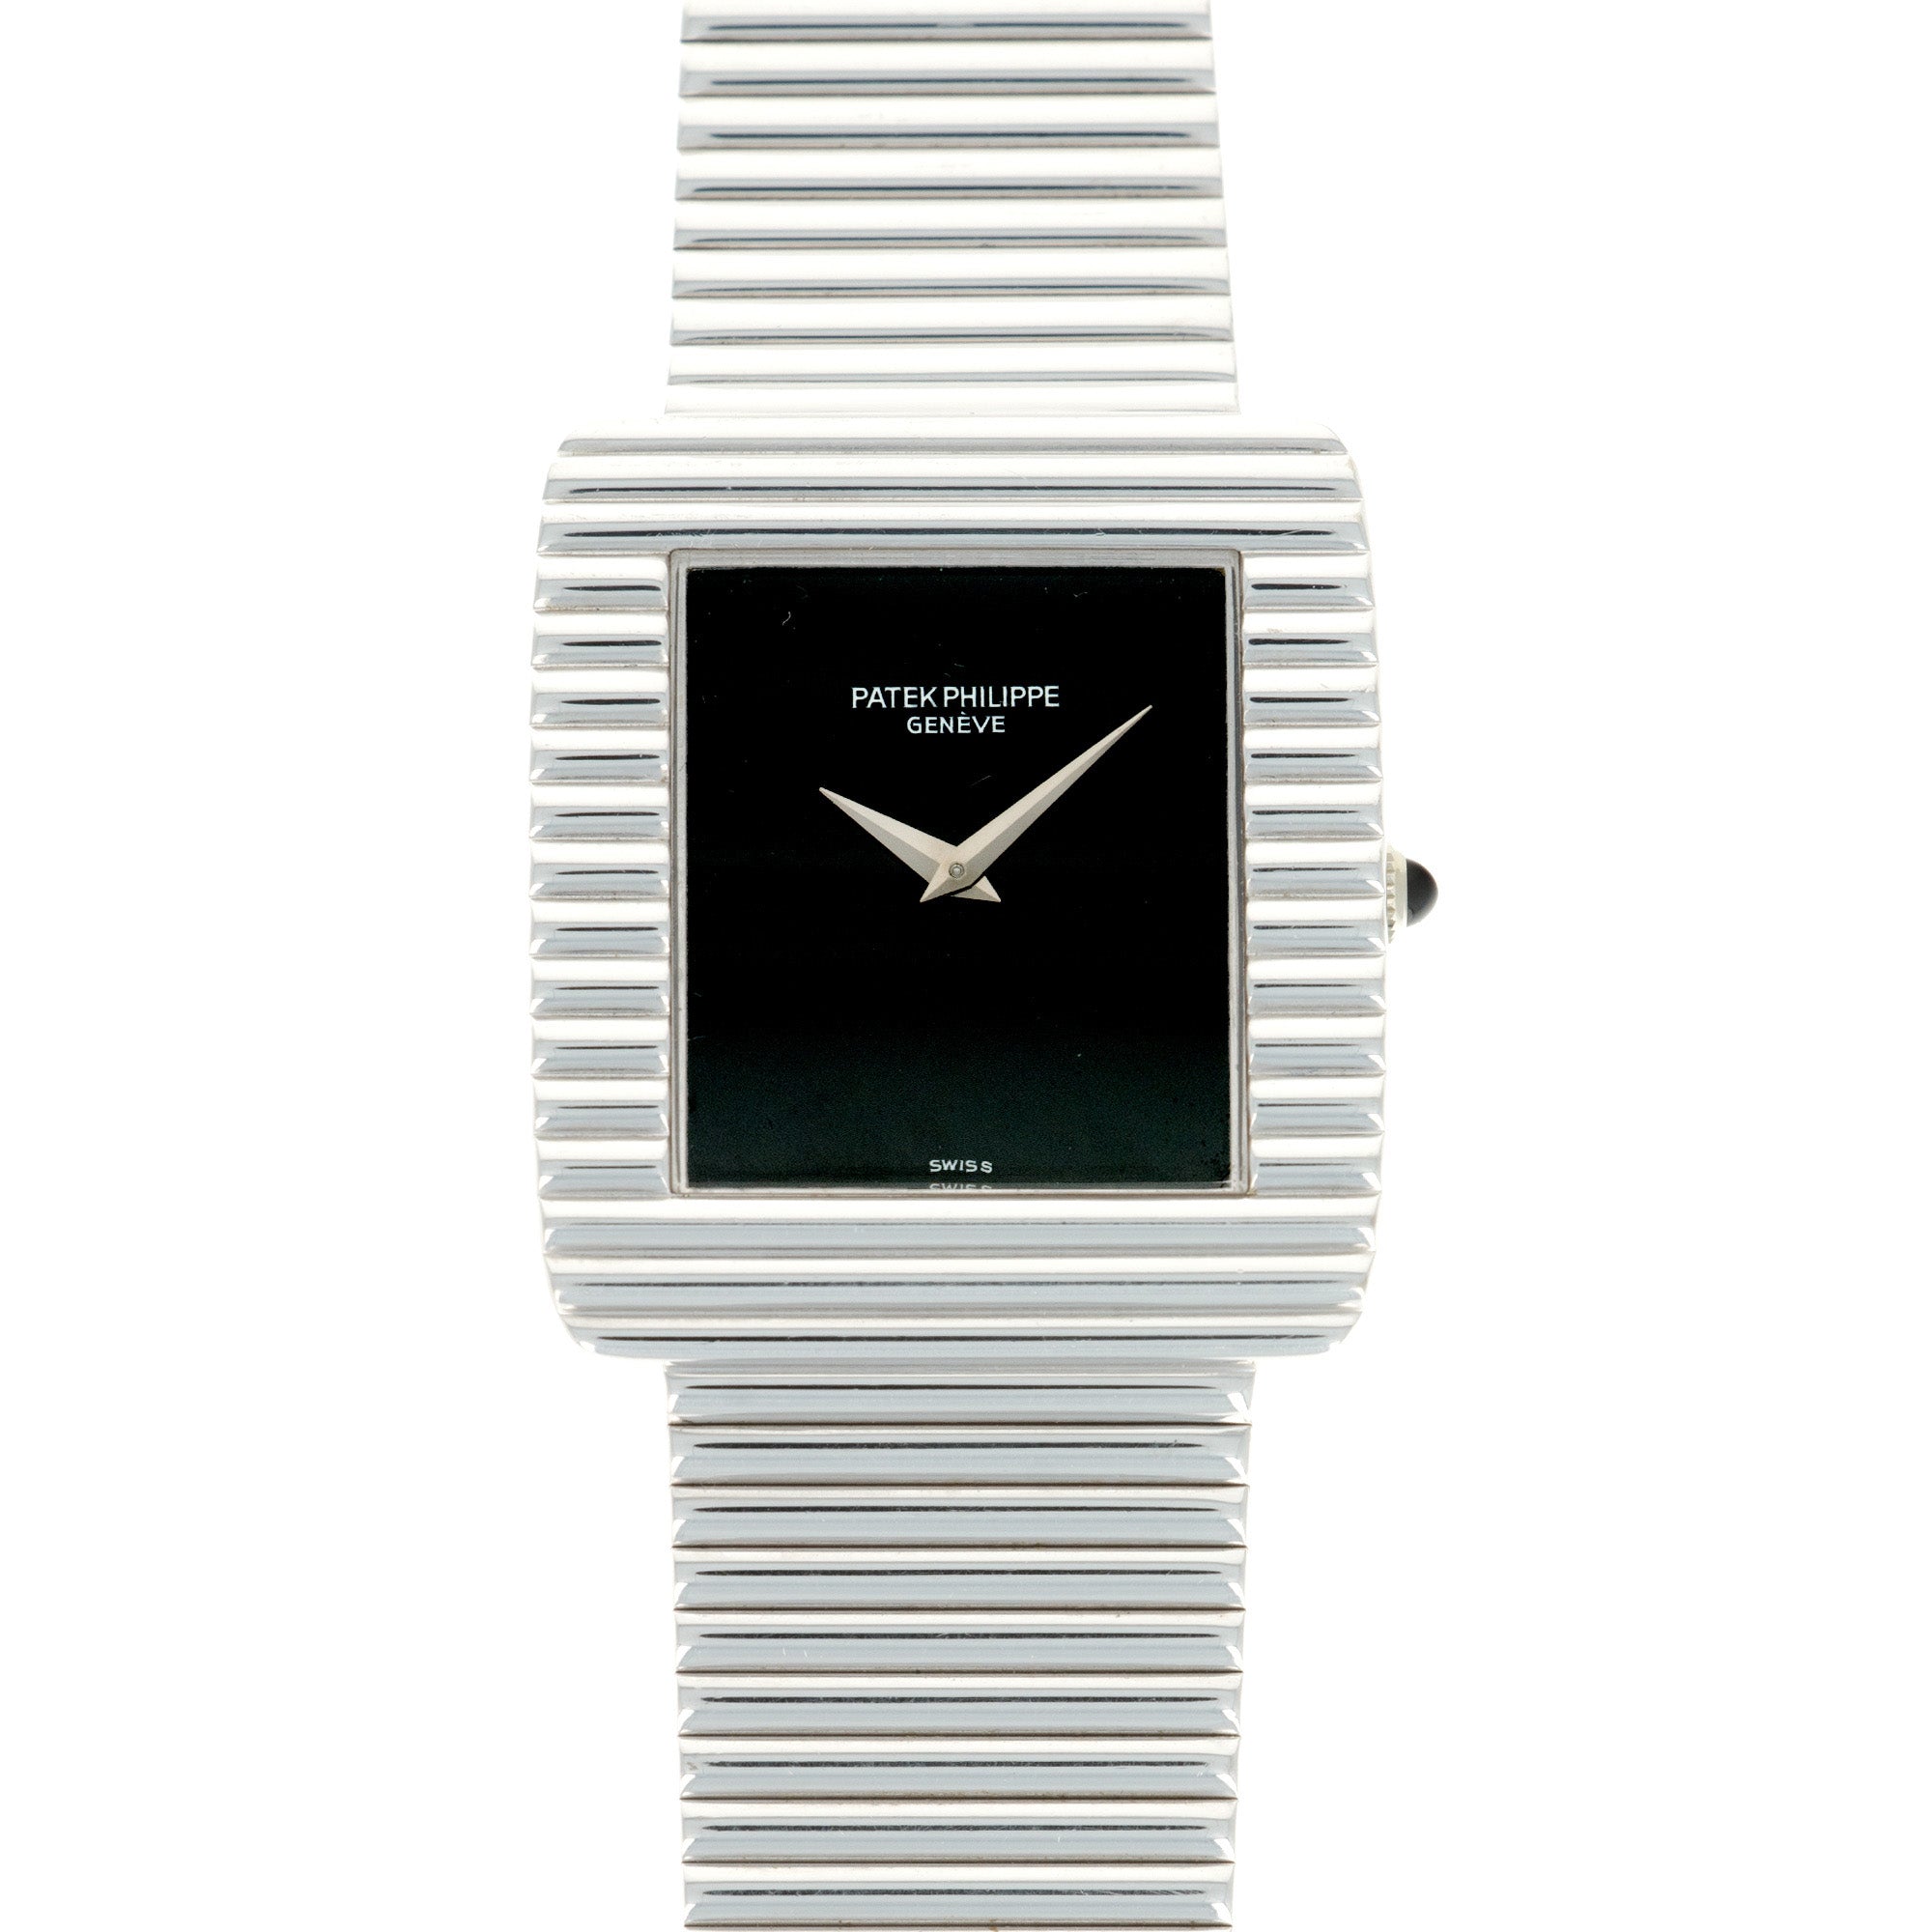 Patek Philippe - Patek Philippe White Gold Onyx Dial Watch, Ref. 3733 - The Keystone Watches